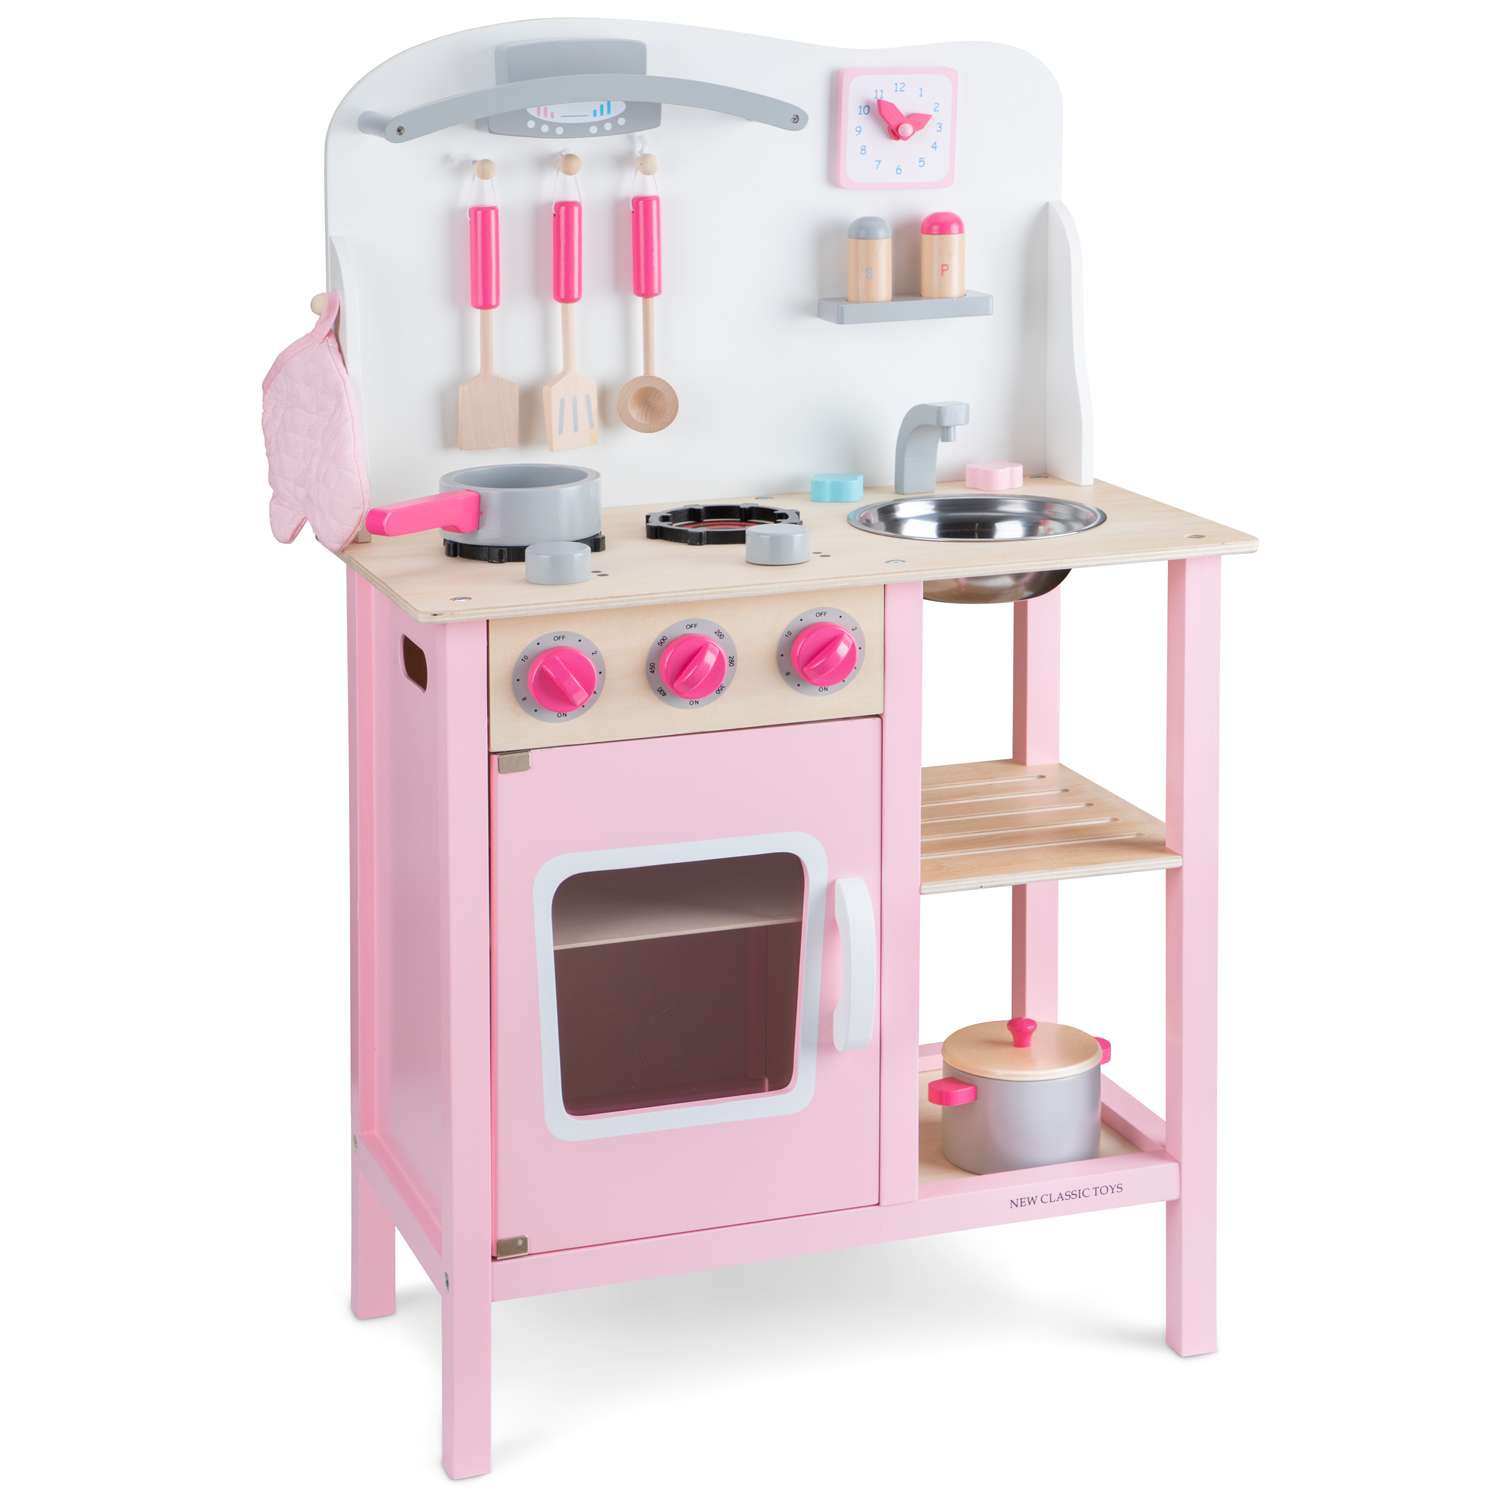 Кухня New Classic Toys розовая 89 см - фото 2